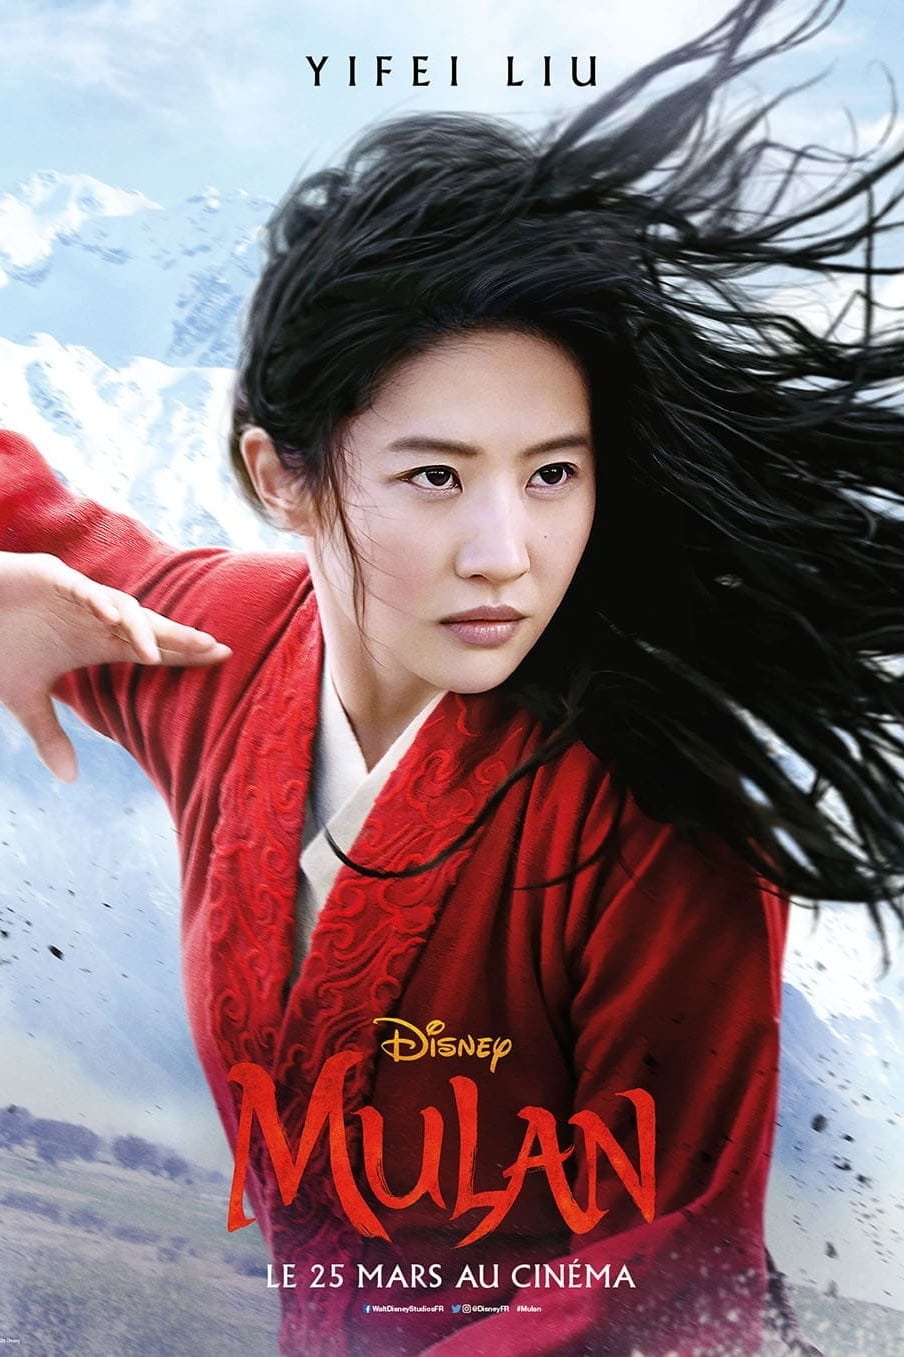 Streaming Mulan 2020 Streaming Hd Mulan 2020 Online Full Movies By Ain Regarder Mulan En Streaming Vf Hd 2020 Film Complet De Niki Caro Avec Liu Yifei Lorsque